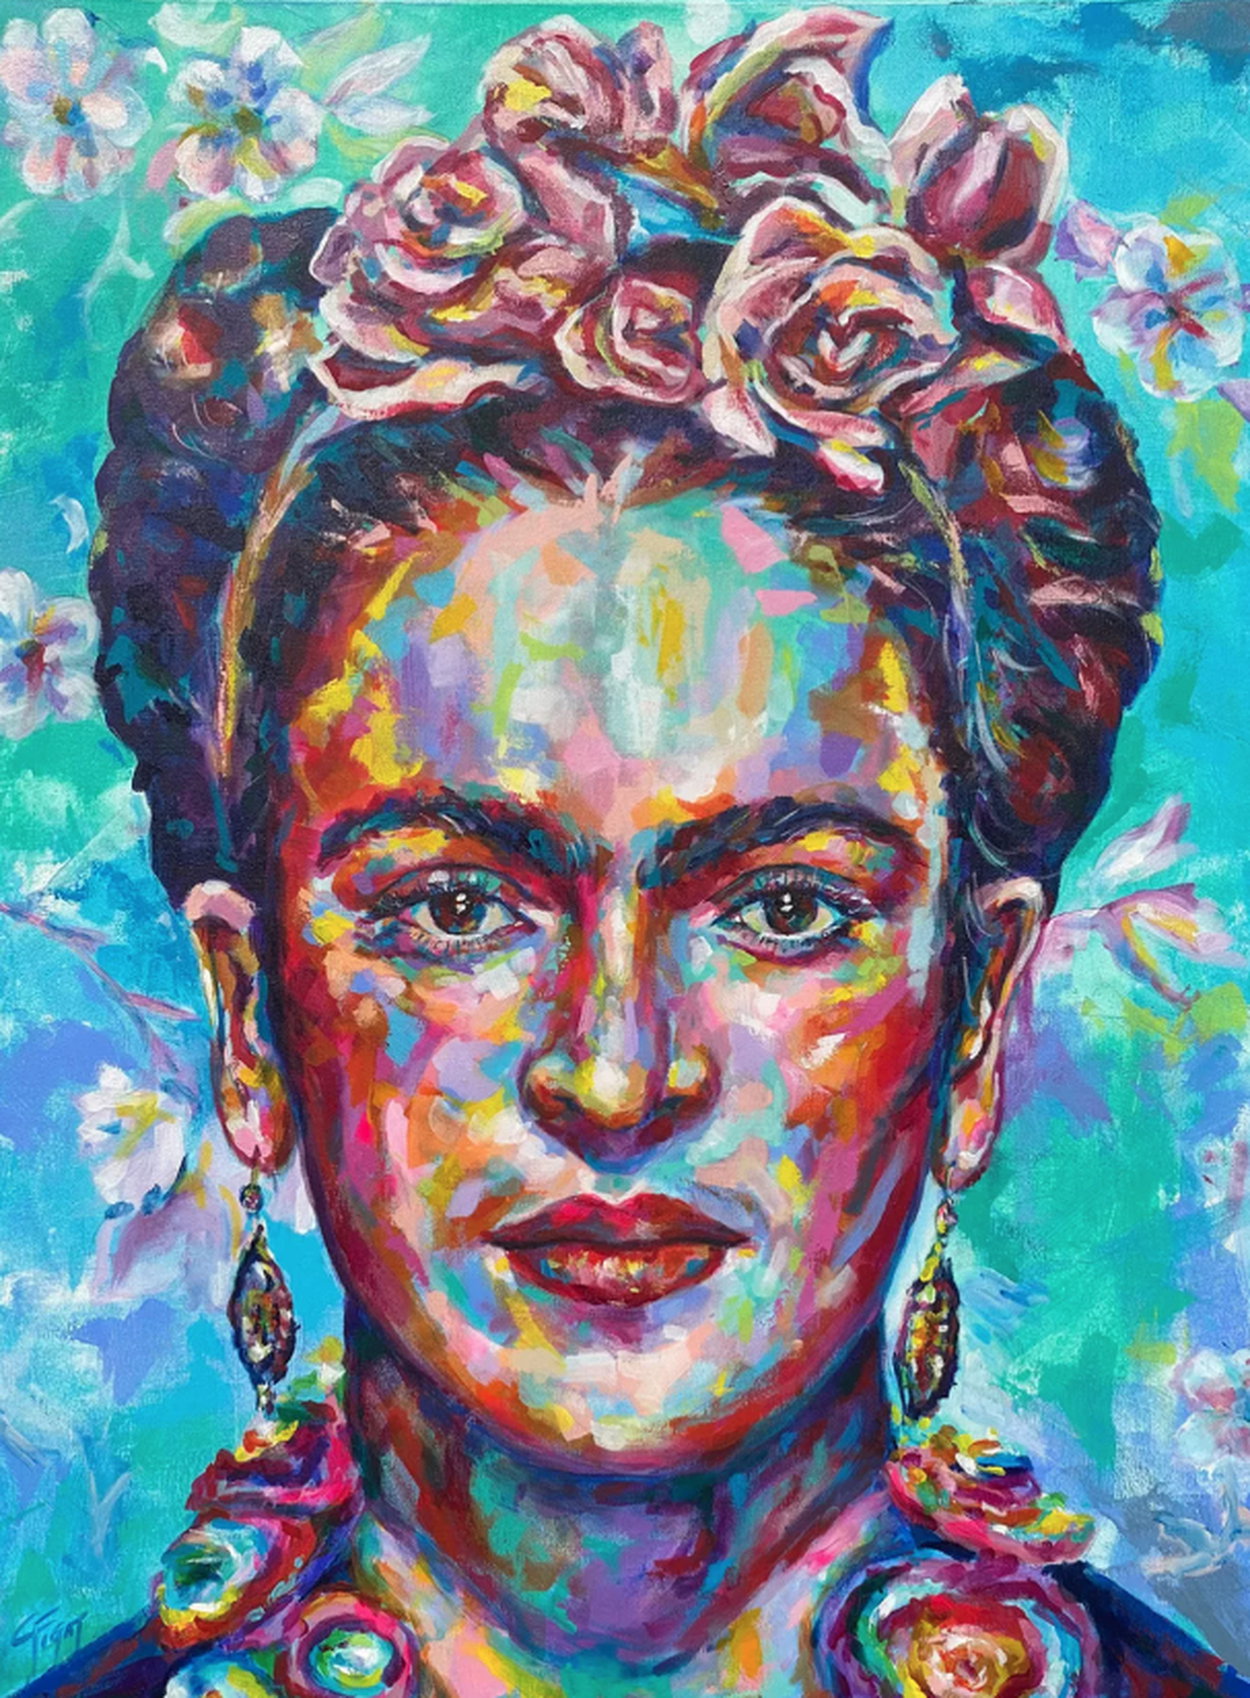 Portraitgemälde "Frida" (2021) von Christopher Figat, Acryl auf Leinwand